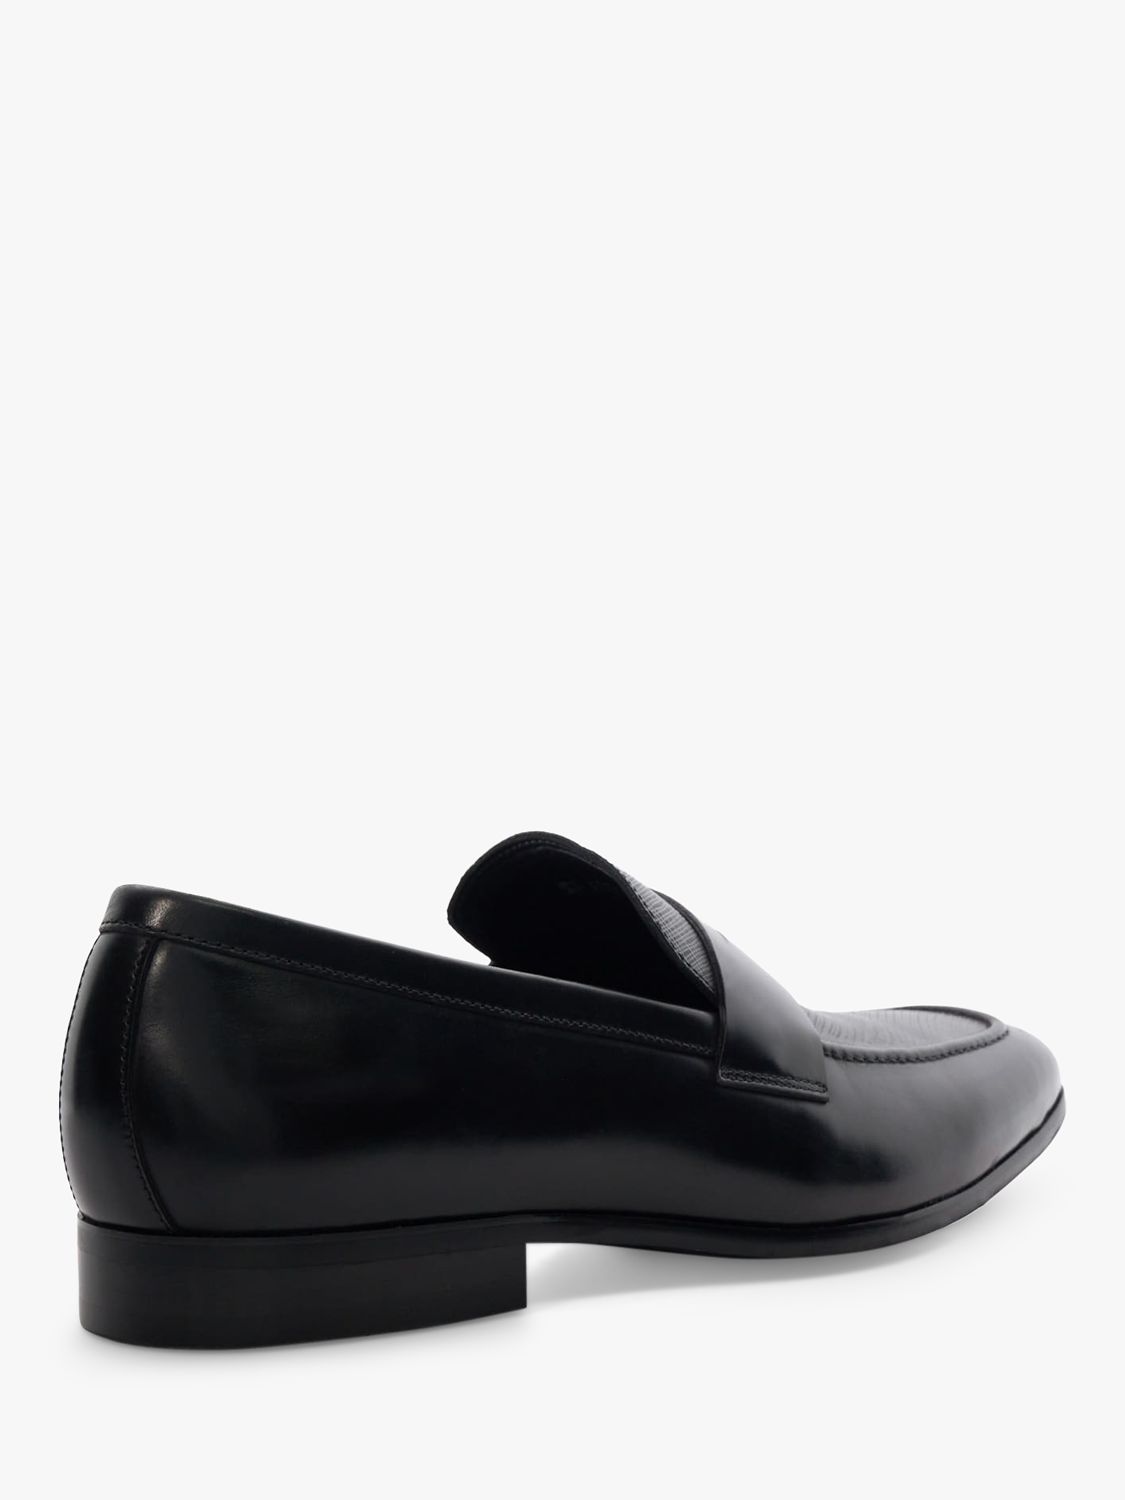 Dune Silvester Saffiano Leather Dress Loafers, Black, 7